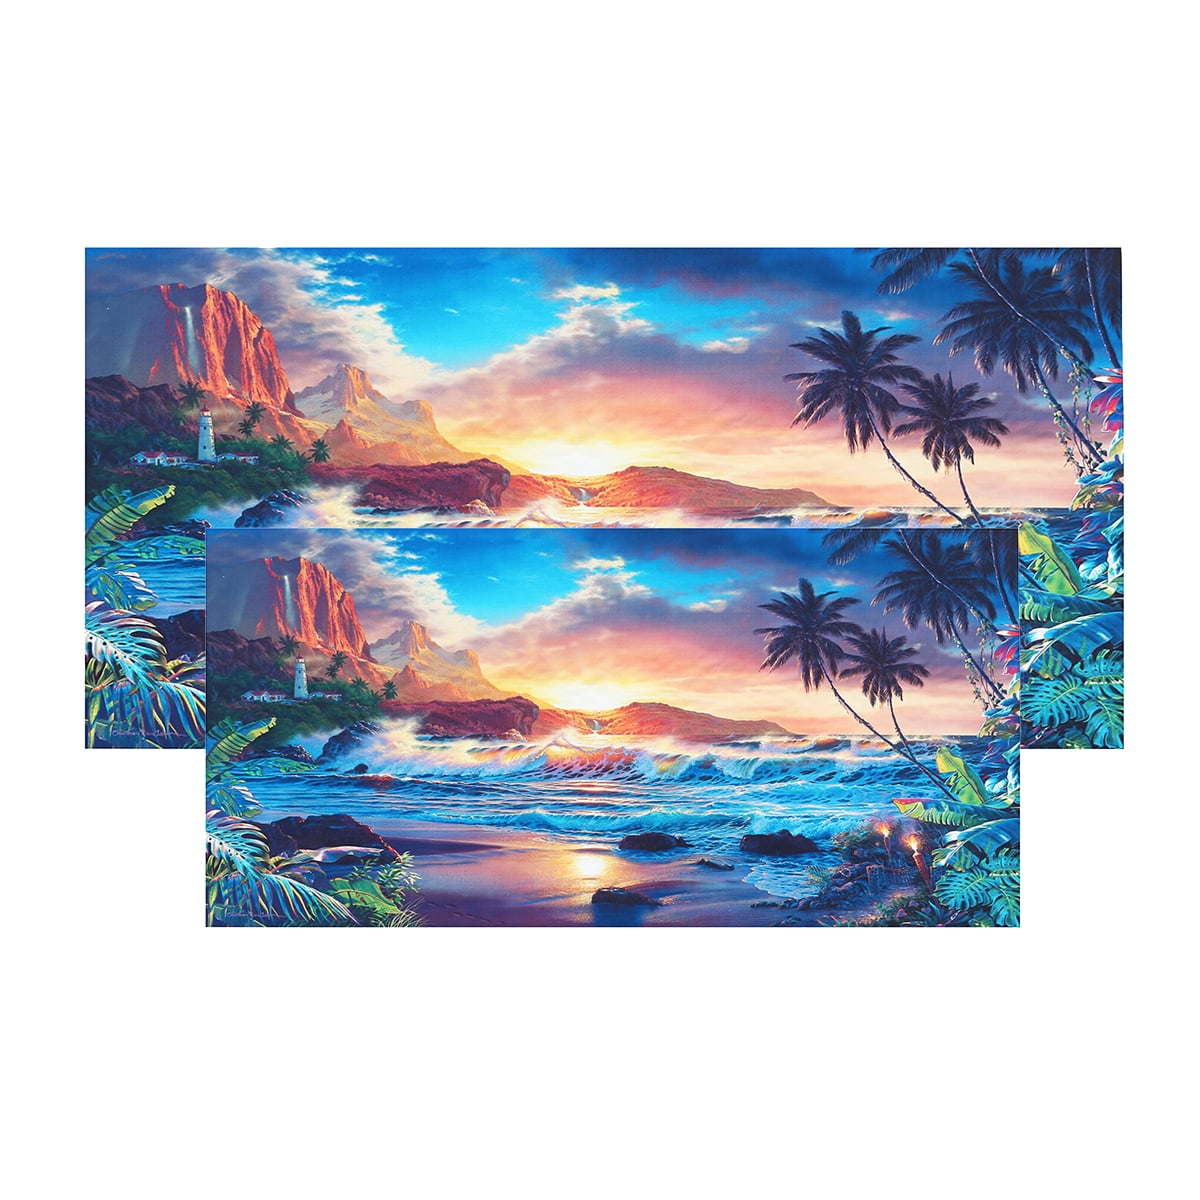 Beach SEASCAPE SUNSET  Canvas Print Framed Photo Picture Wall Artwork WA